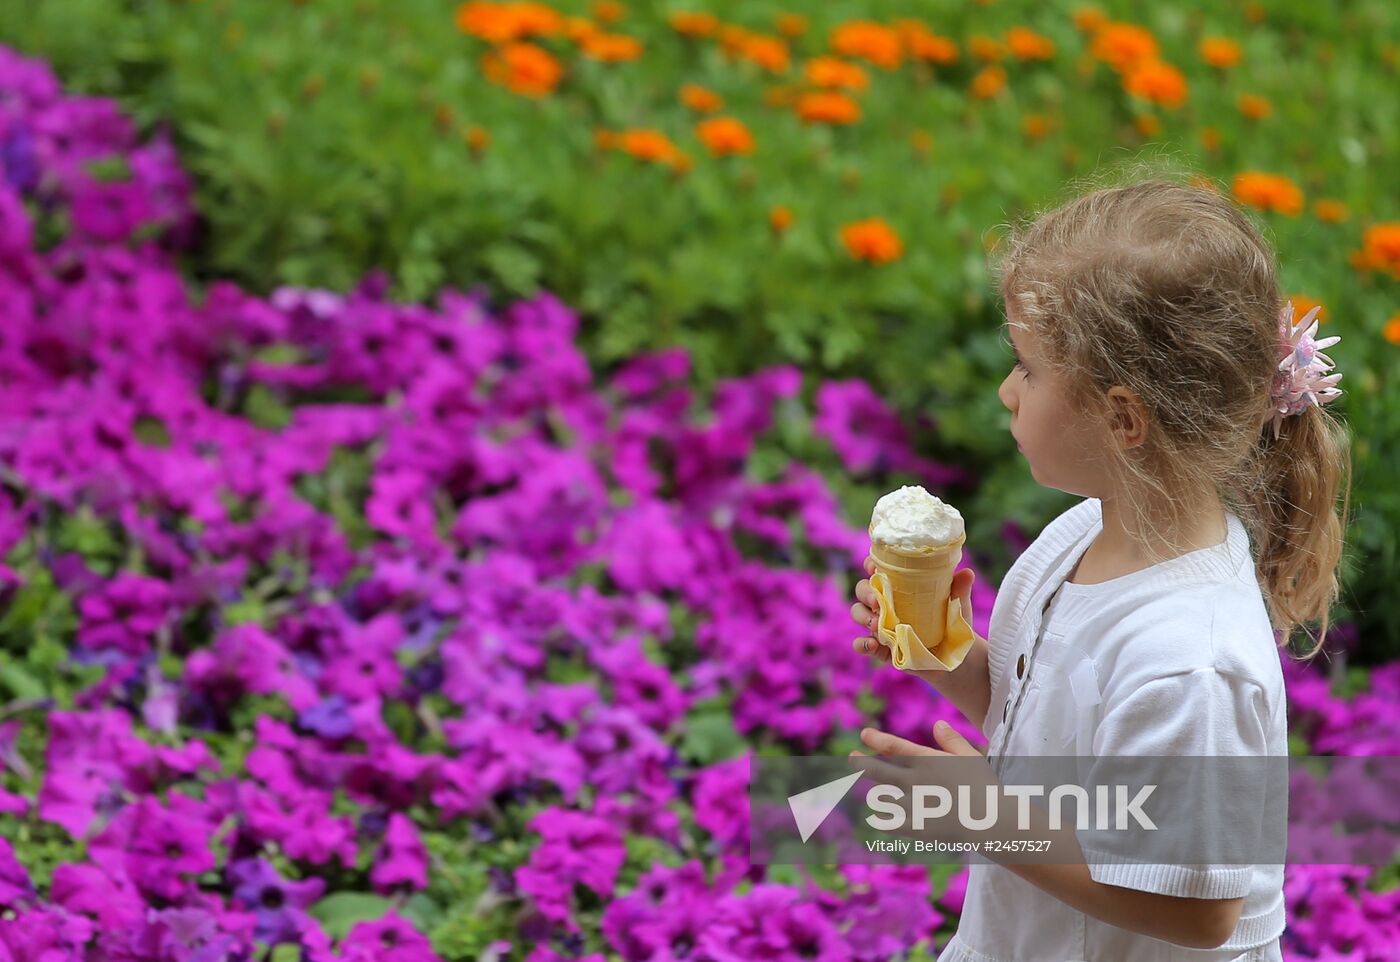 Flower festival in Moscow